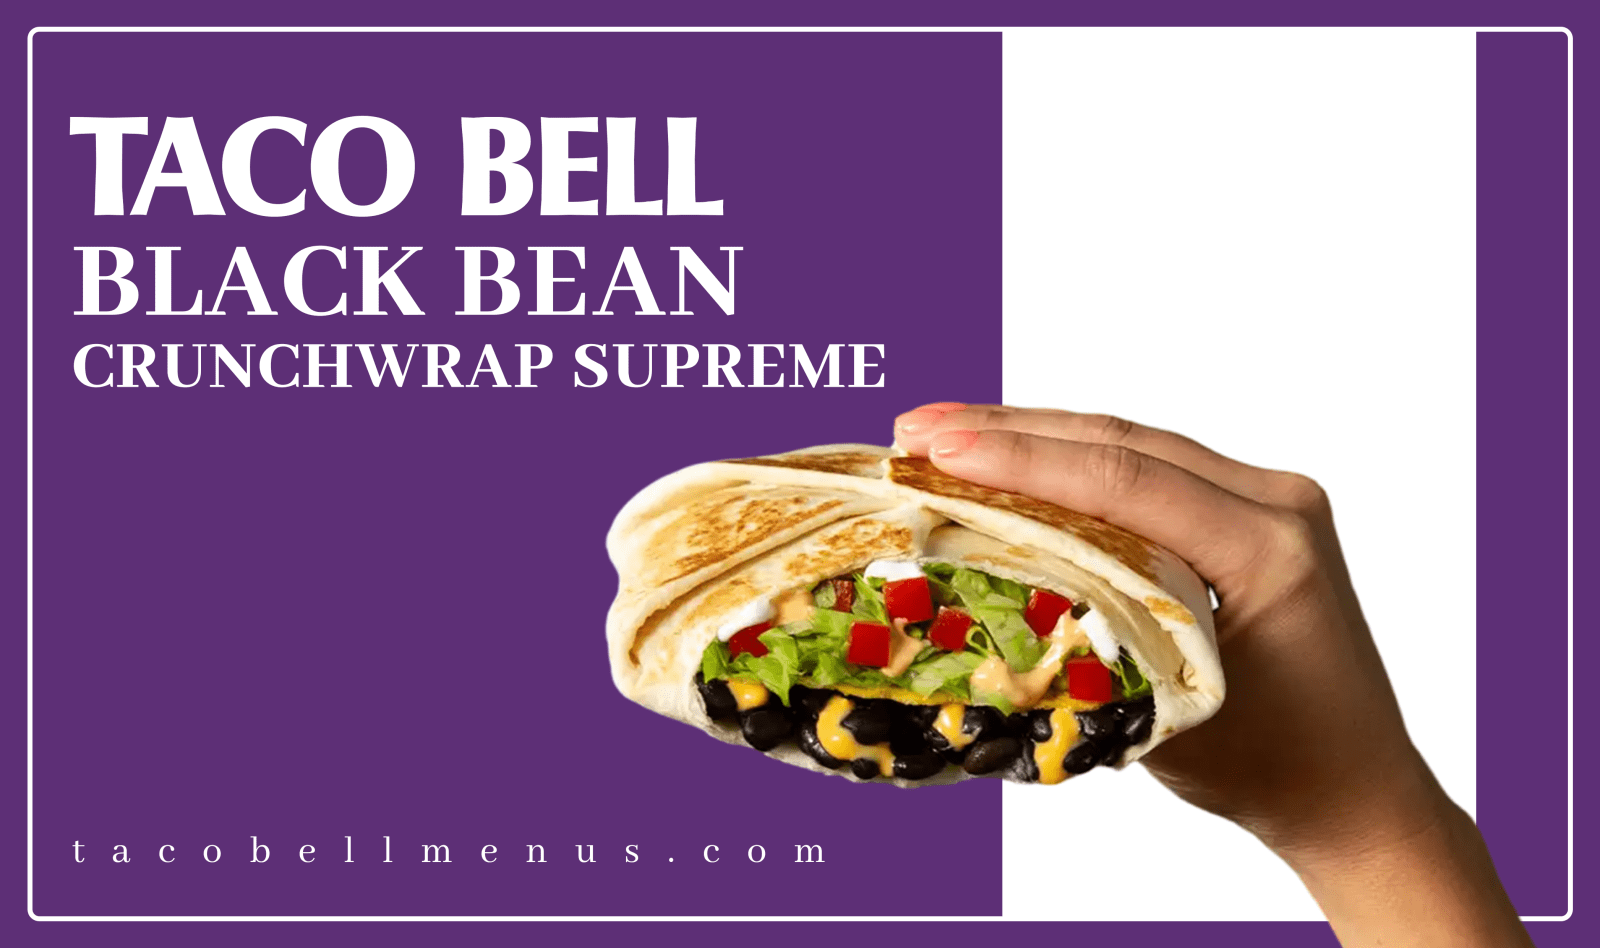 "Taco Bell Black Bean Crunchwrap Supreme, Black Bean Crunchwrap Supreme price, recipe, calories, calories in taco bell crunchwrap supreme, taco bell crunchwrap supreme price, taco bell crunchwrap supreme box" 